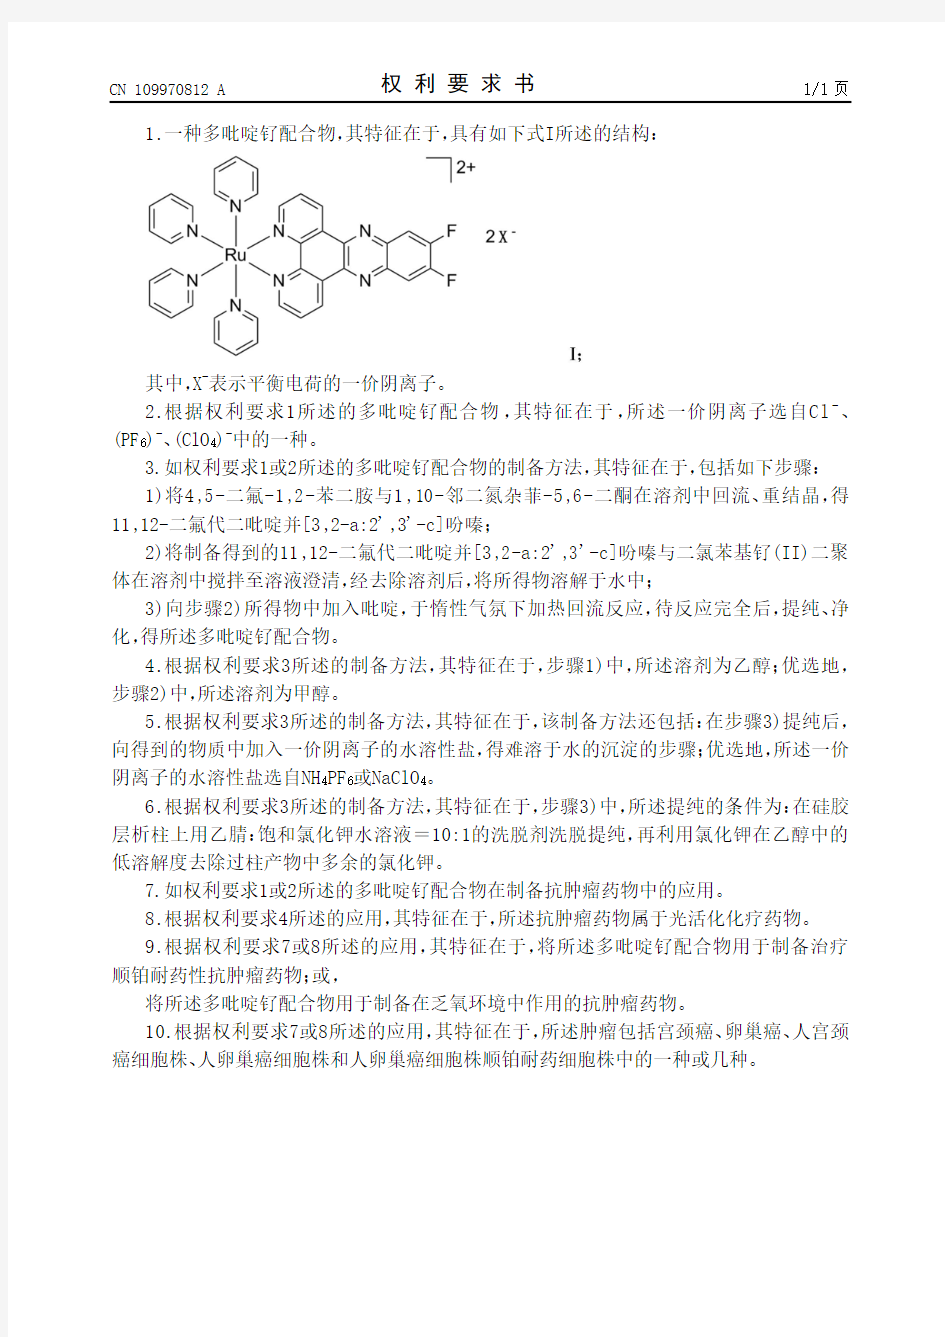 【CN109970812A】一种多吡啶钌配合物及其制备方法和应用【专利】